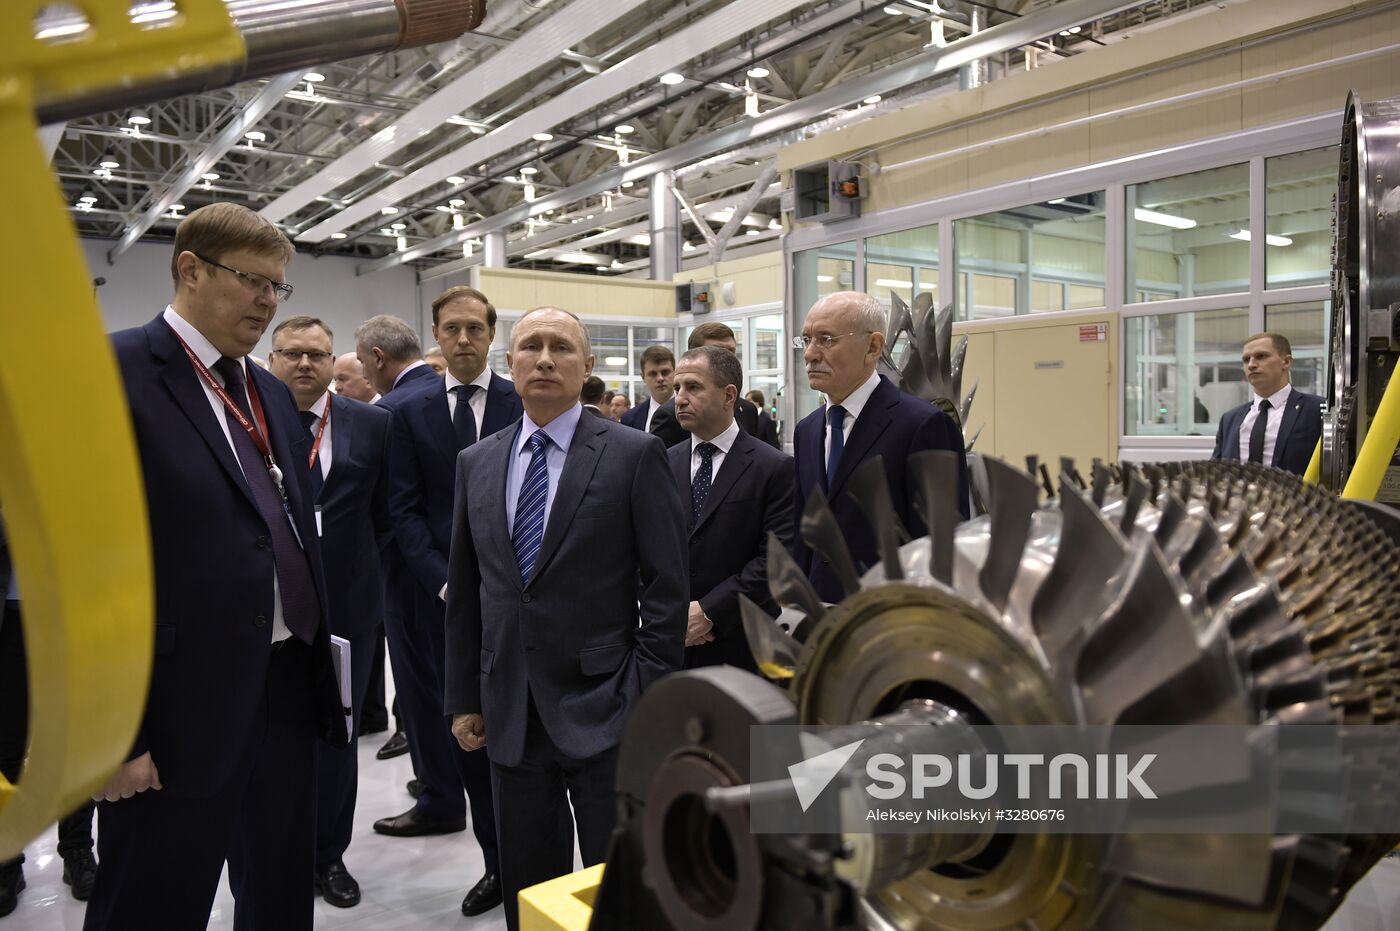 President Vladimir Putin's working visit to Bashkiria